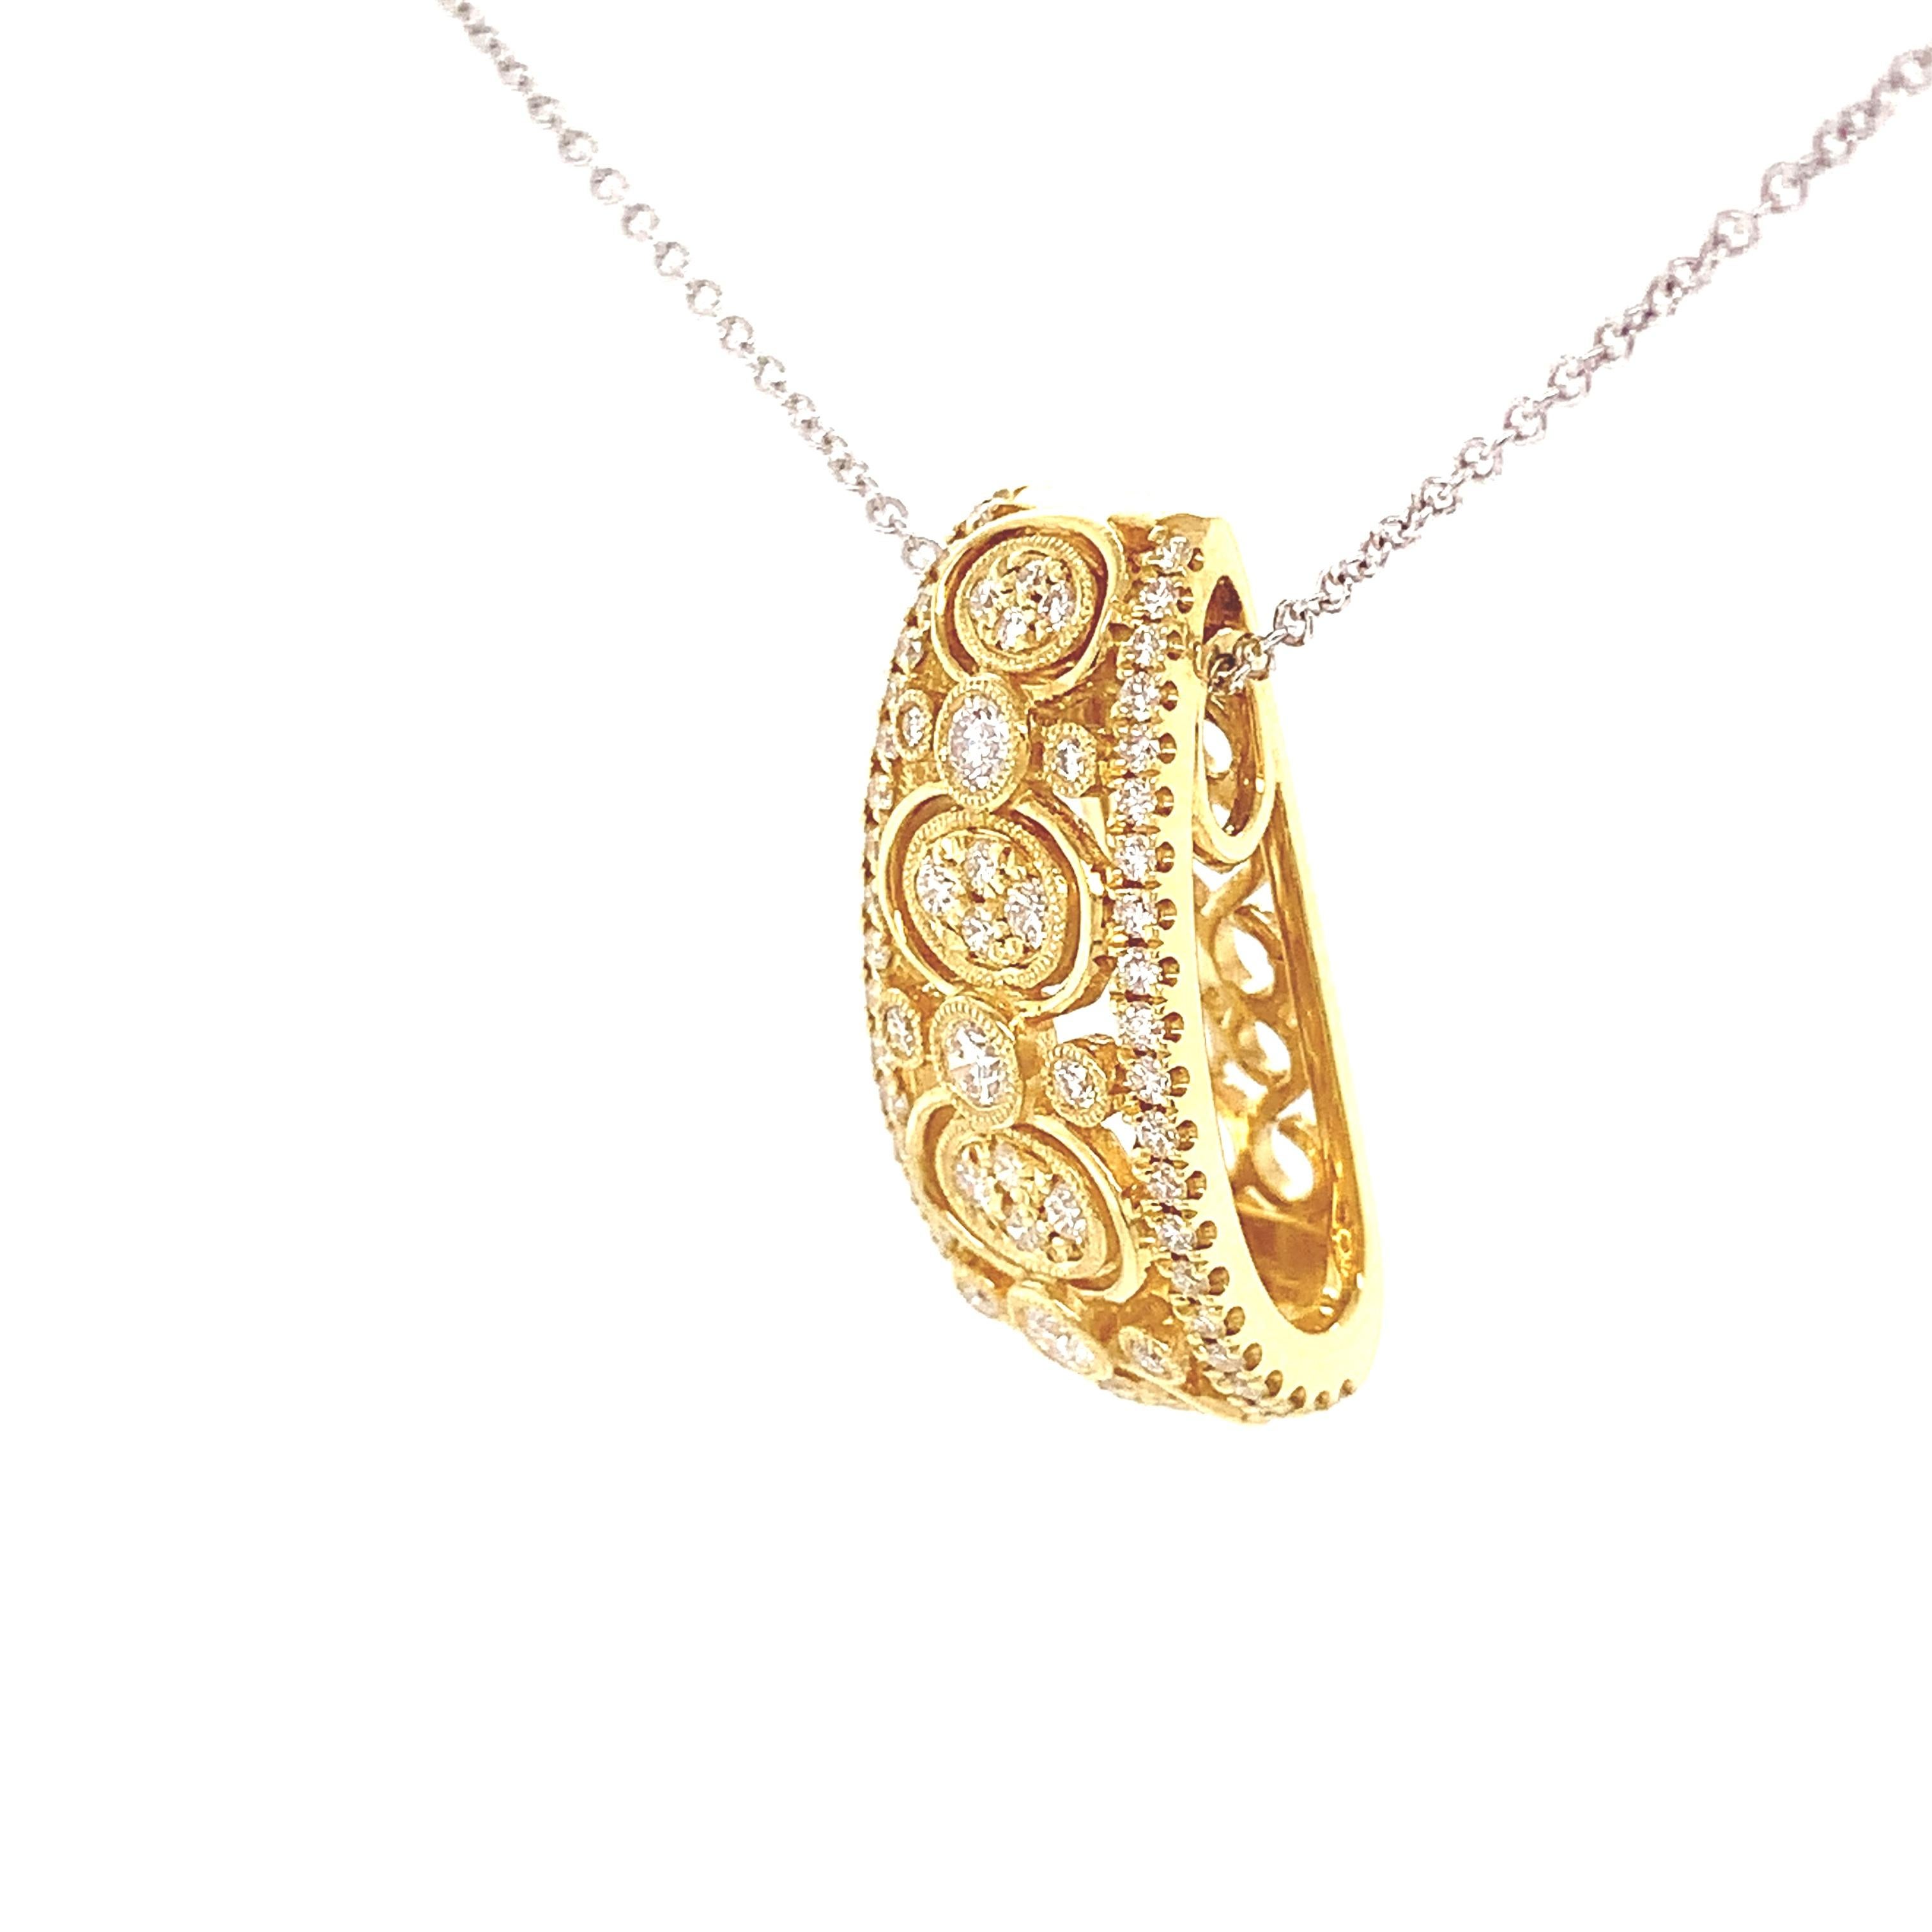 Simon G. Vintage Style Filigree Diamond Pendant Necklace in 18K Yellow Gold For Sale 3